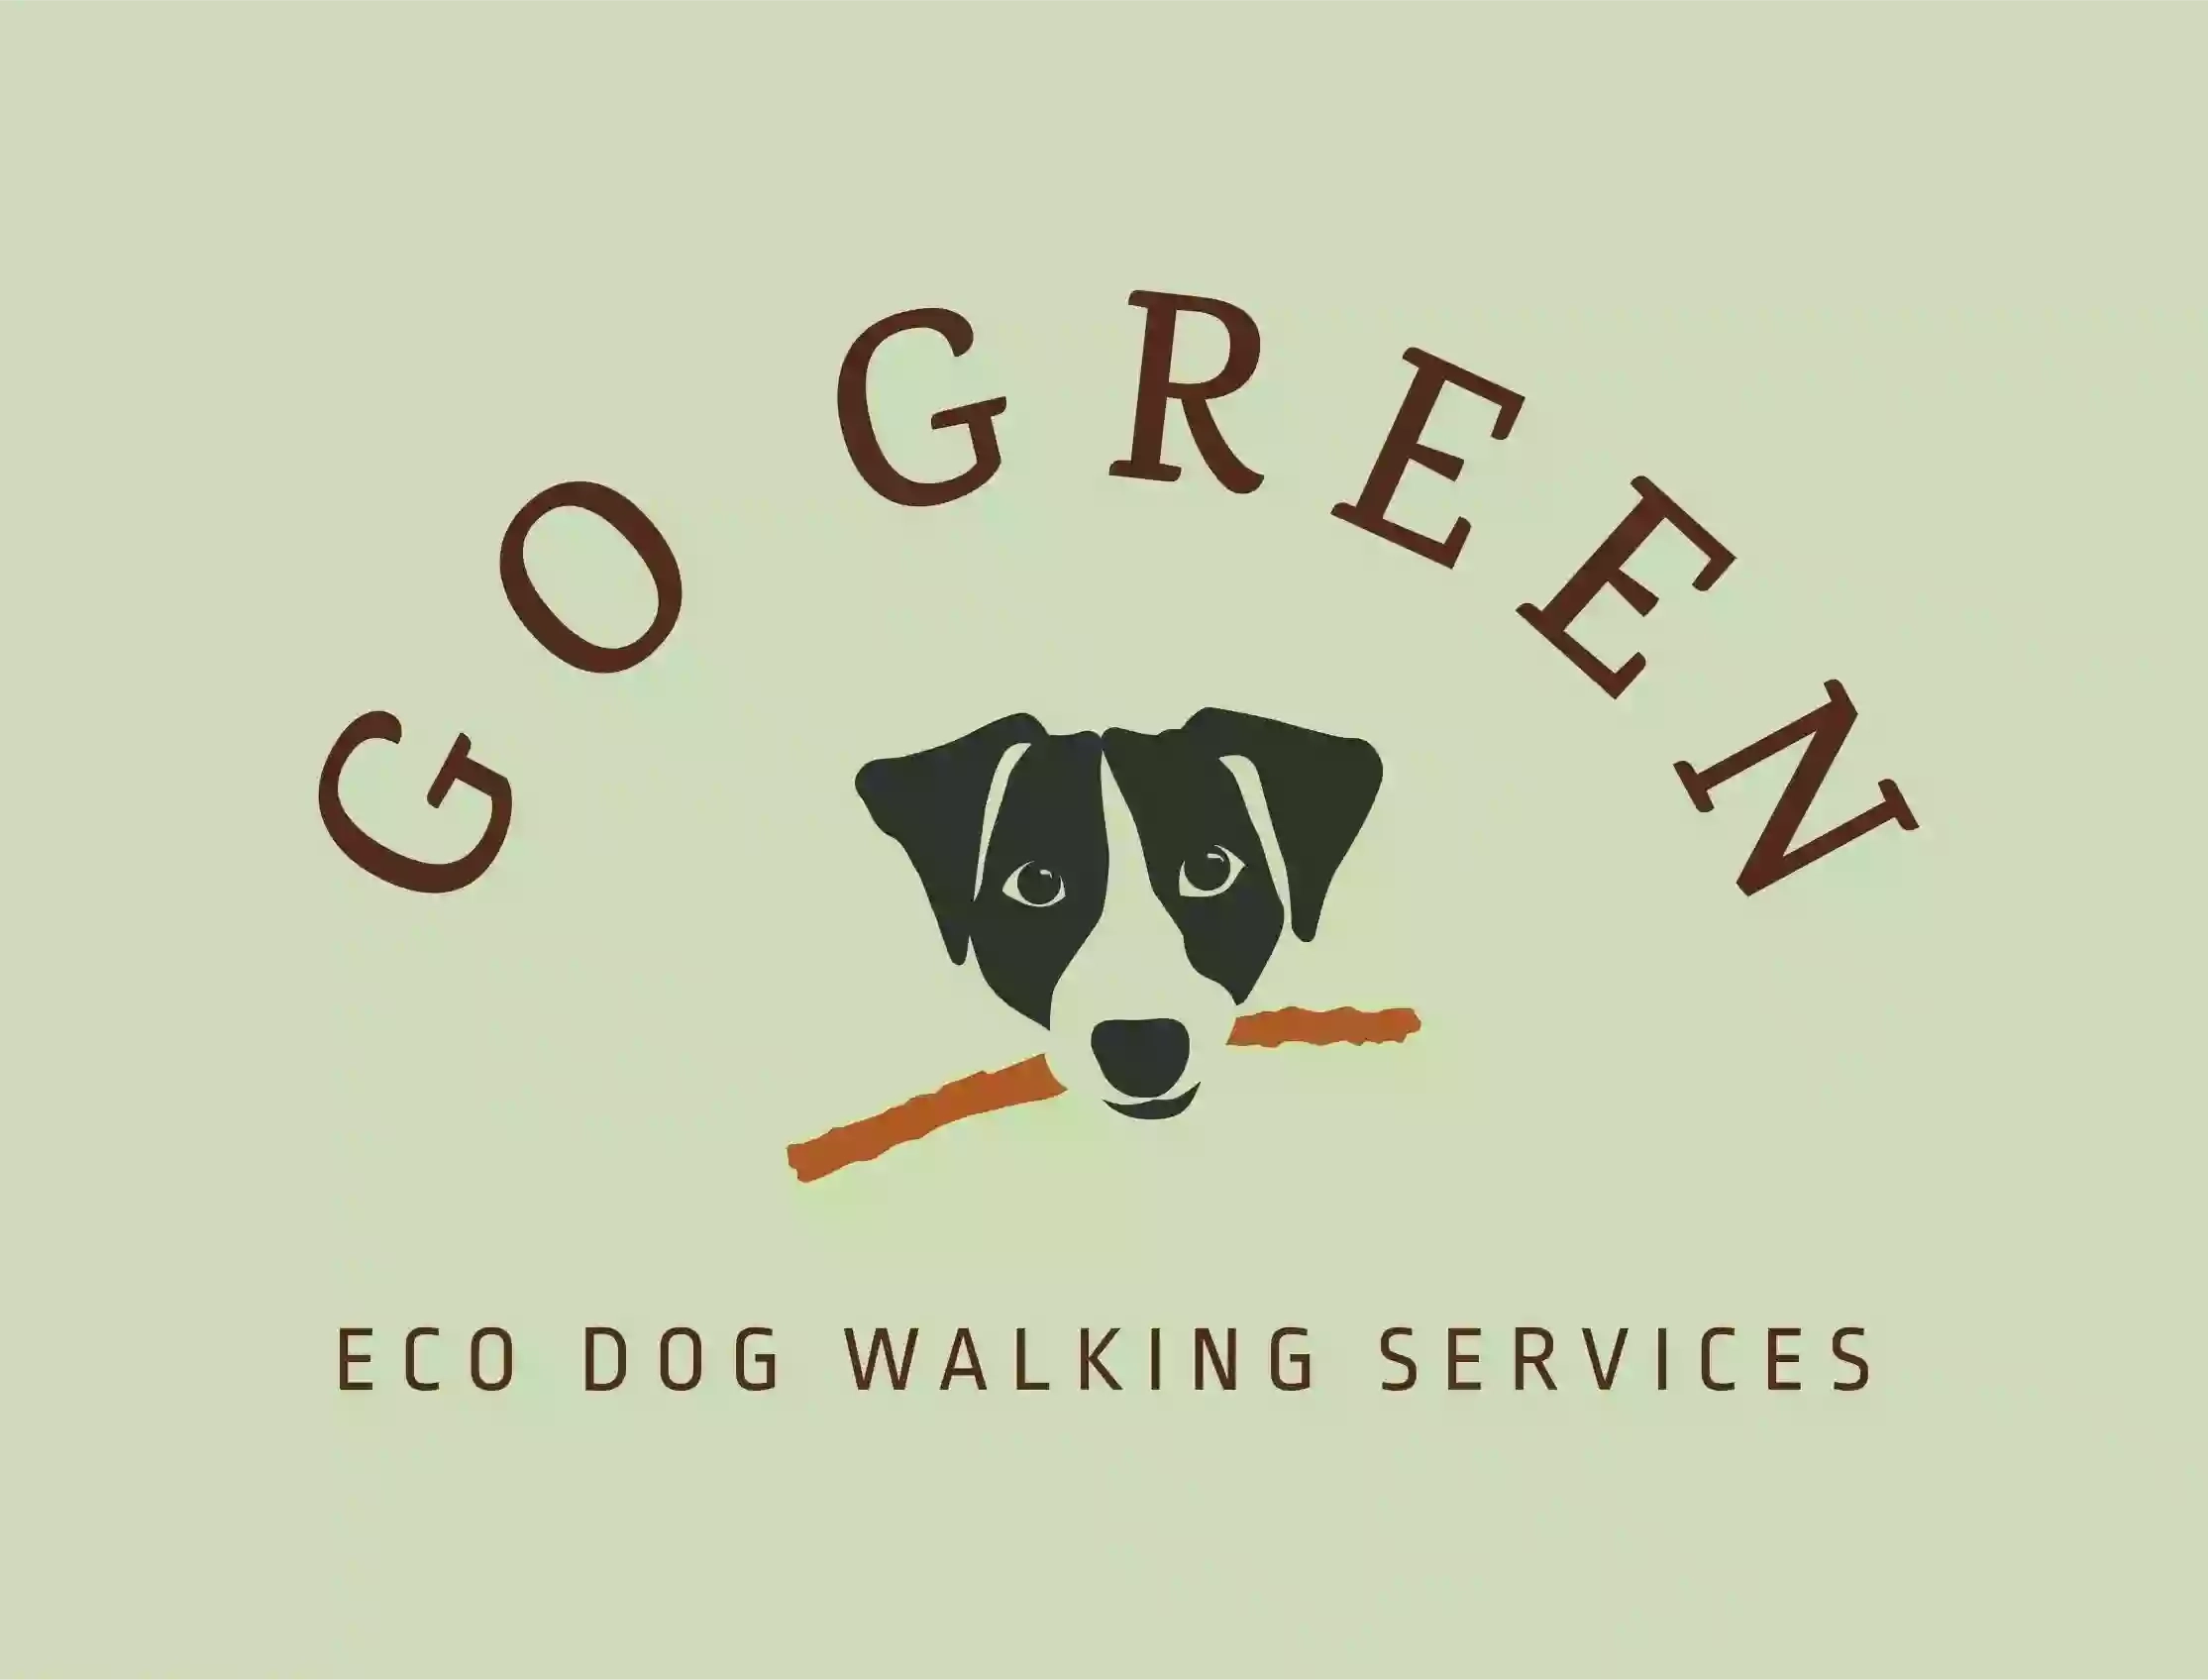 Go Green Dog Walking